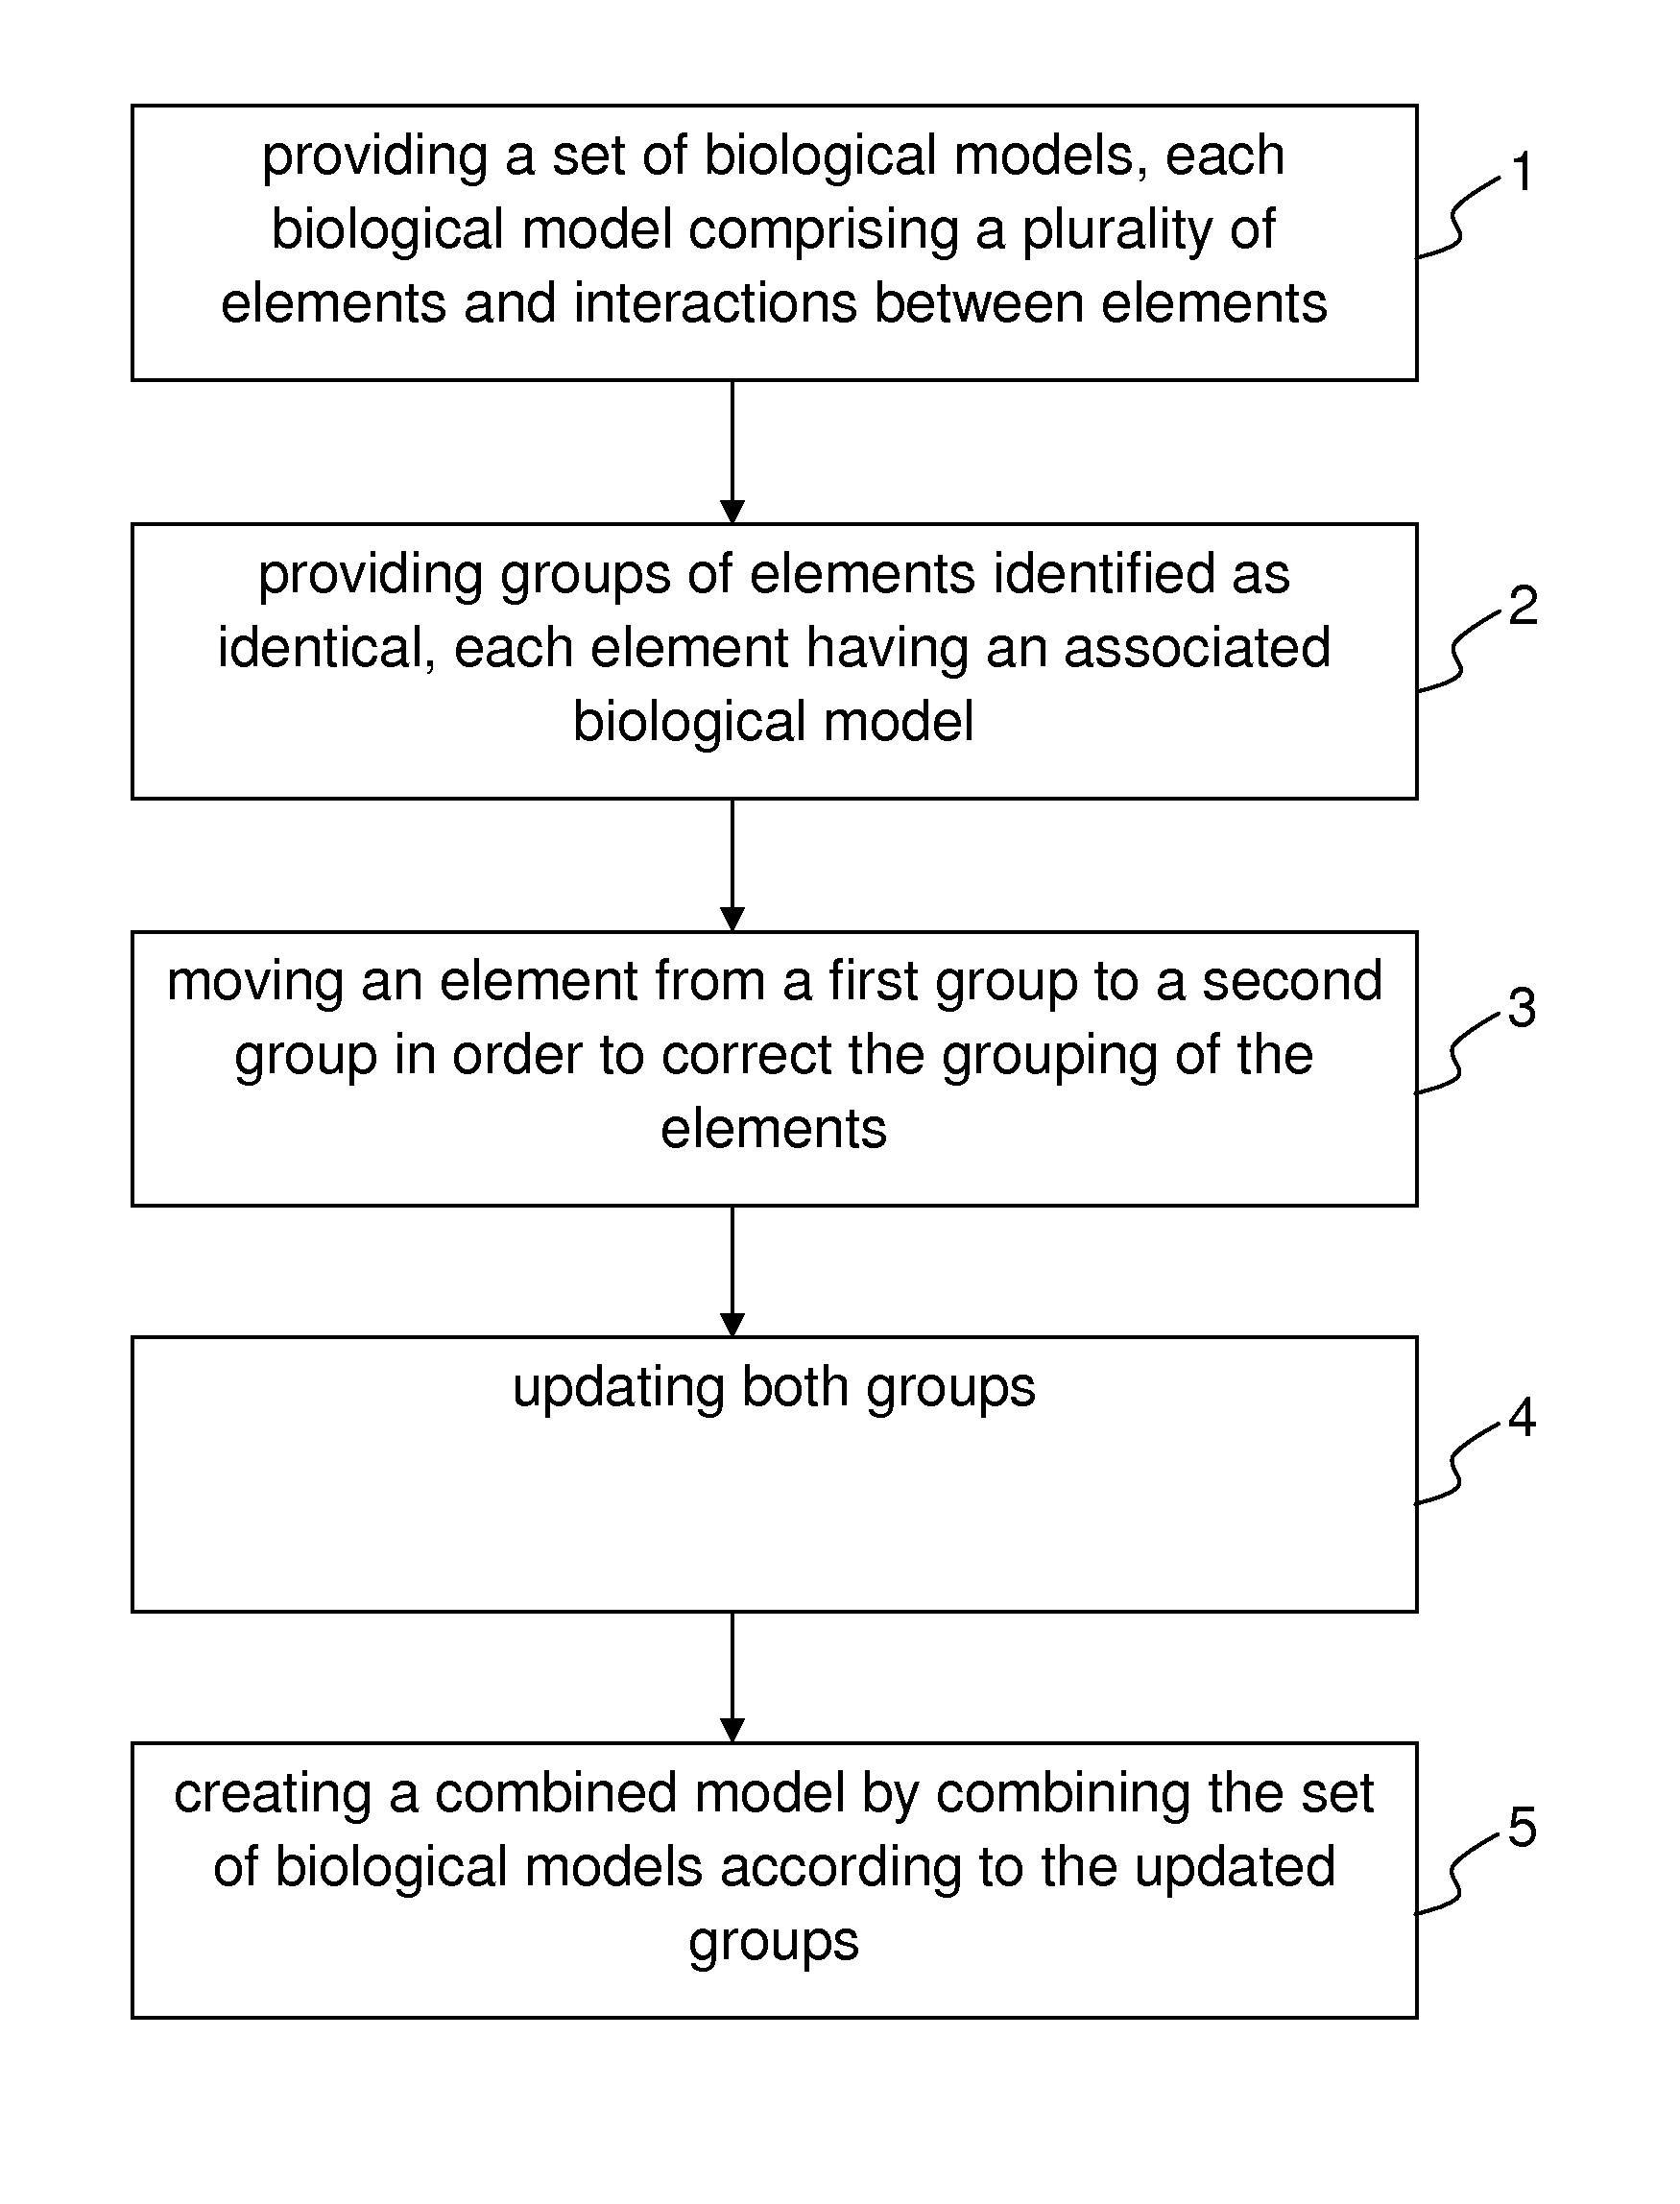 Computer-implemented method for designing a biological model